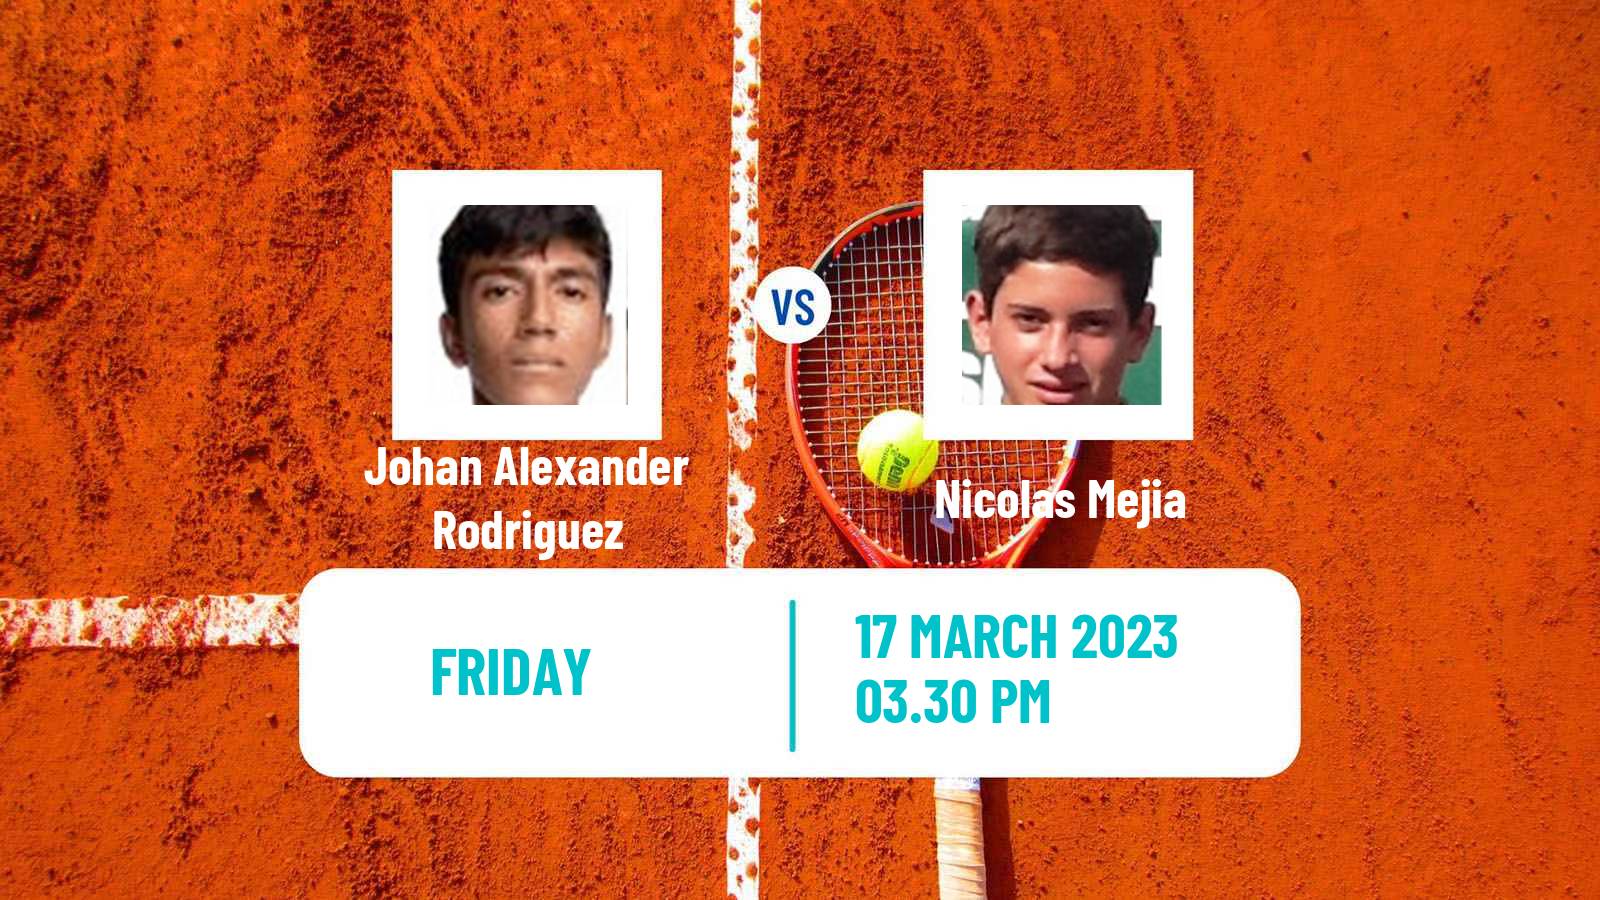 Tennis ITF Tournaments Johan Alexander Rodriguez - Nicolas Mejia